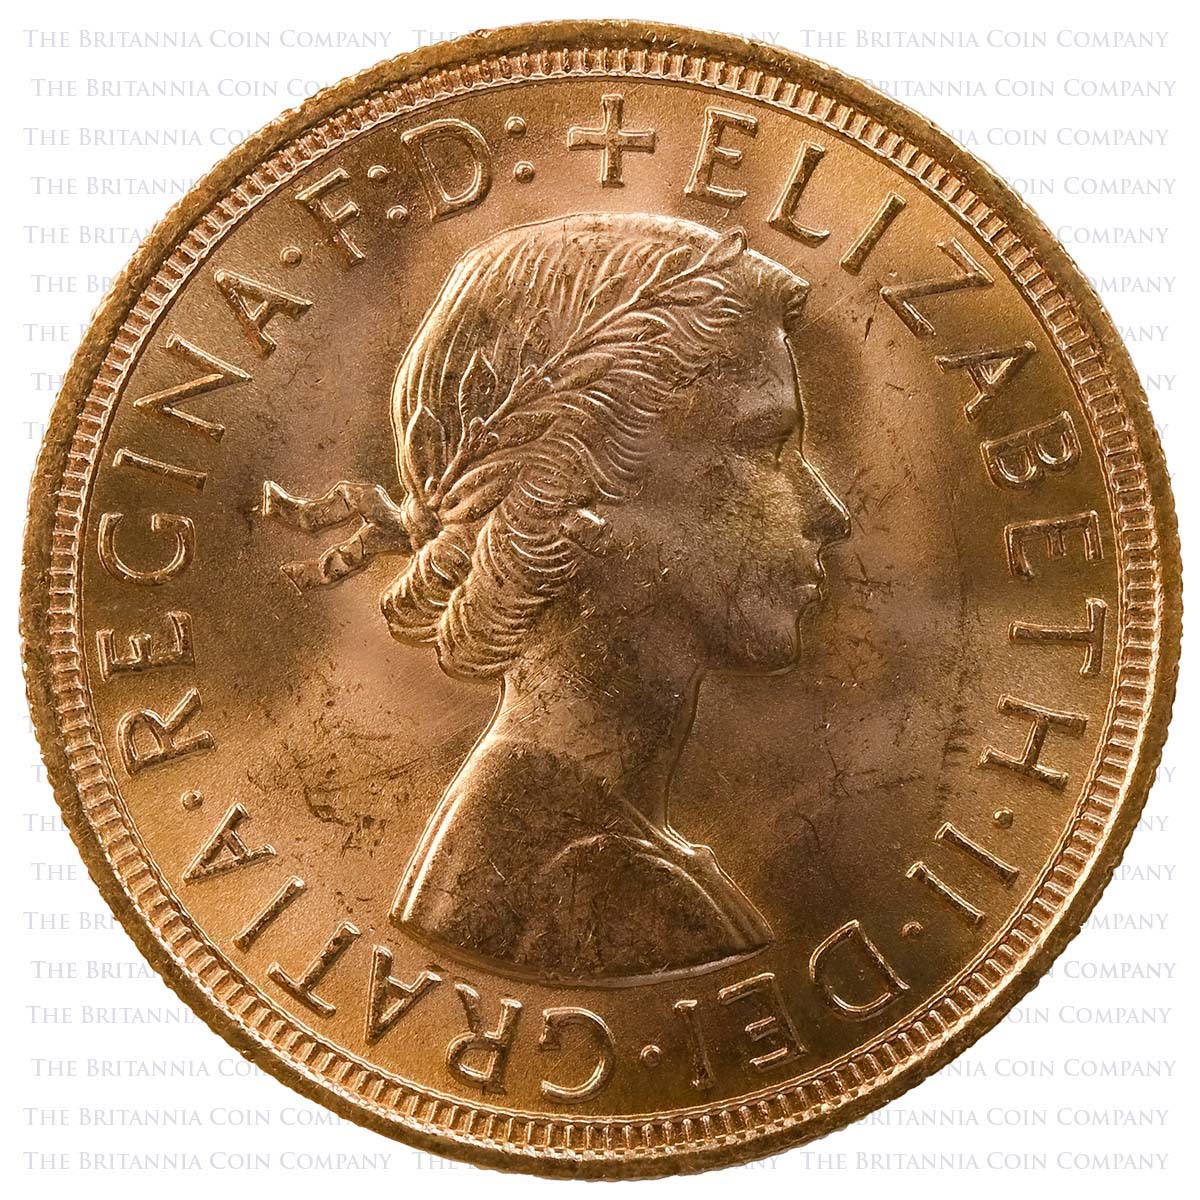 HISLMEF 2015 Elizabeth II 5 Coin Sovereign Effigy Set Longest Reigning Monarch Mary Gillick